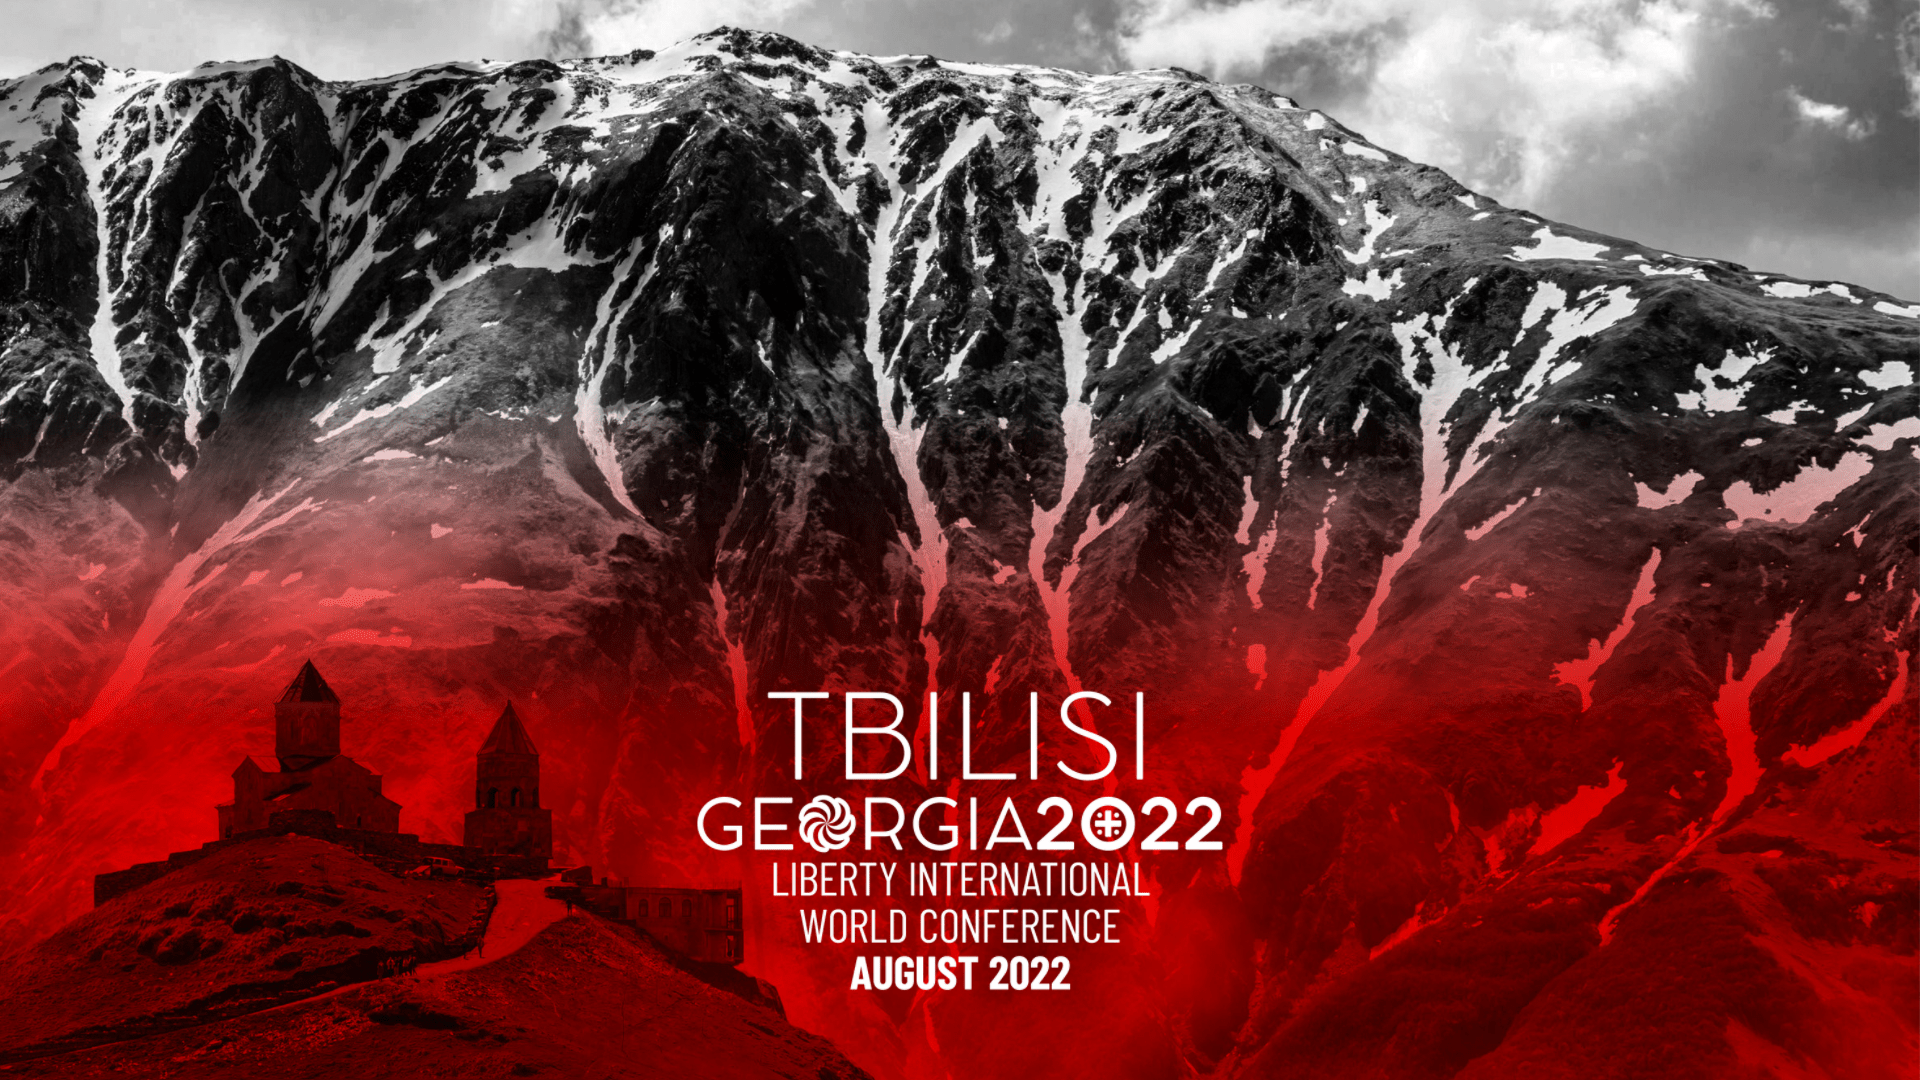 FWiP gospodarzem Liberty International World Conference Tbilisi 2022!